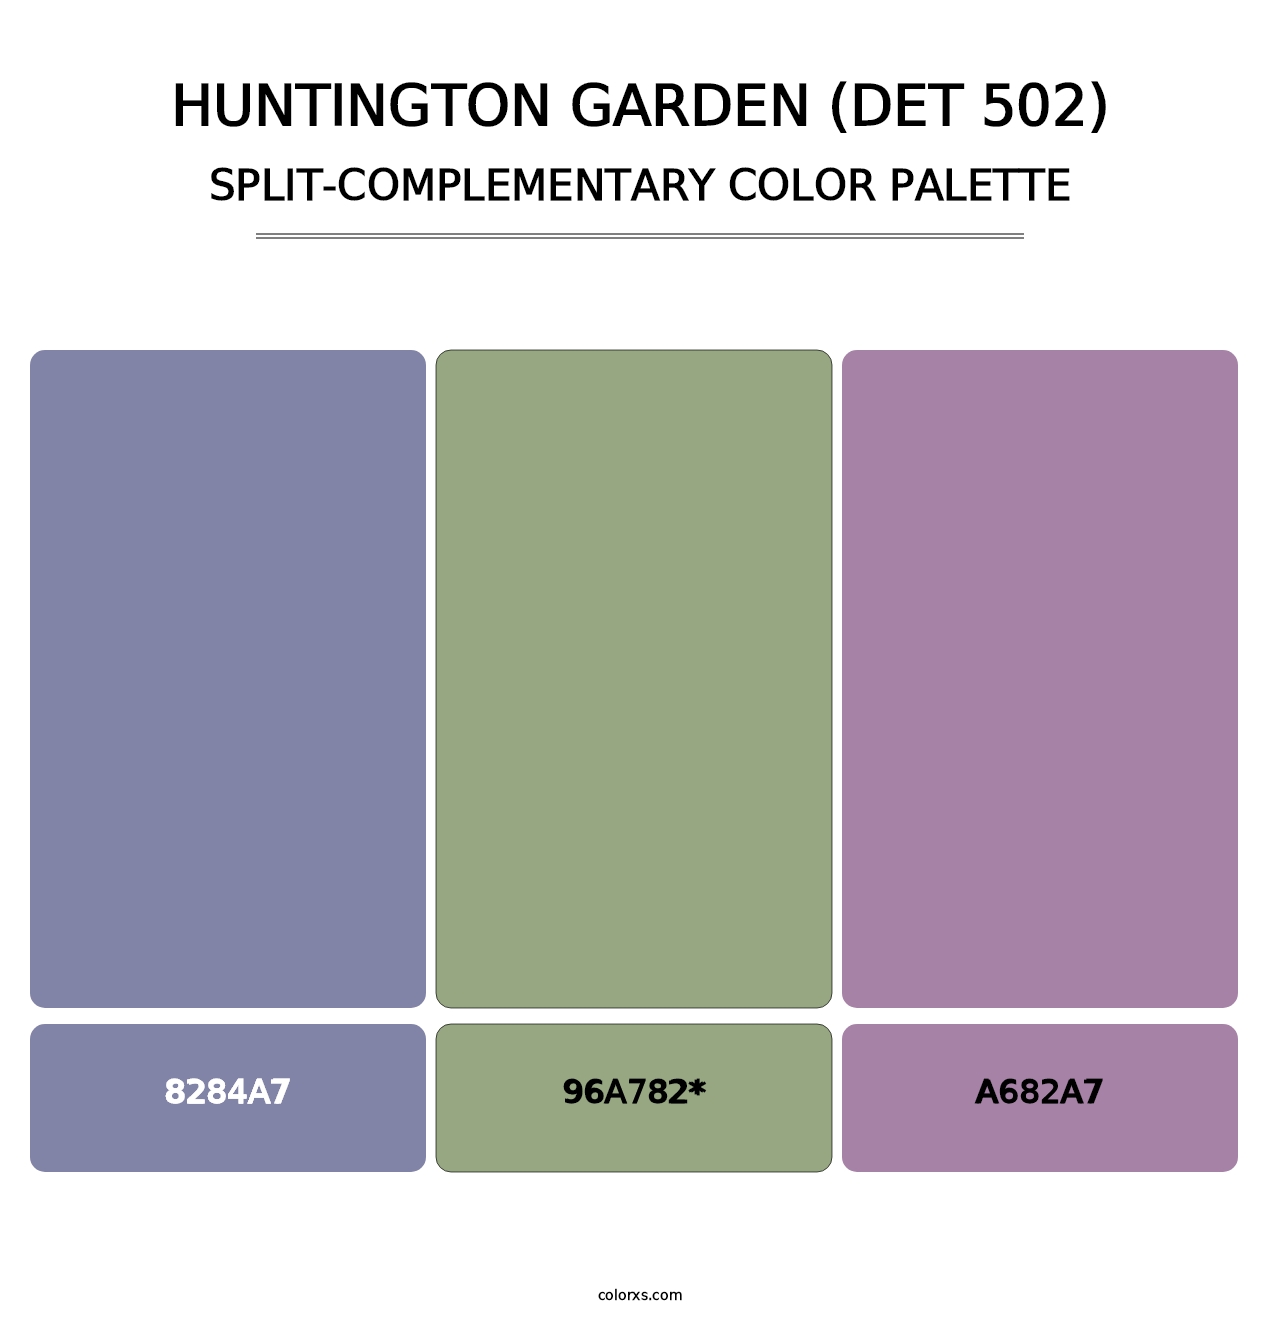 Huntington Garden (DET 502) - Split-Complementary Color Palette